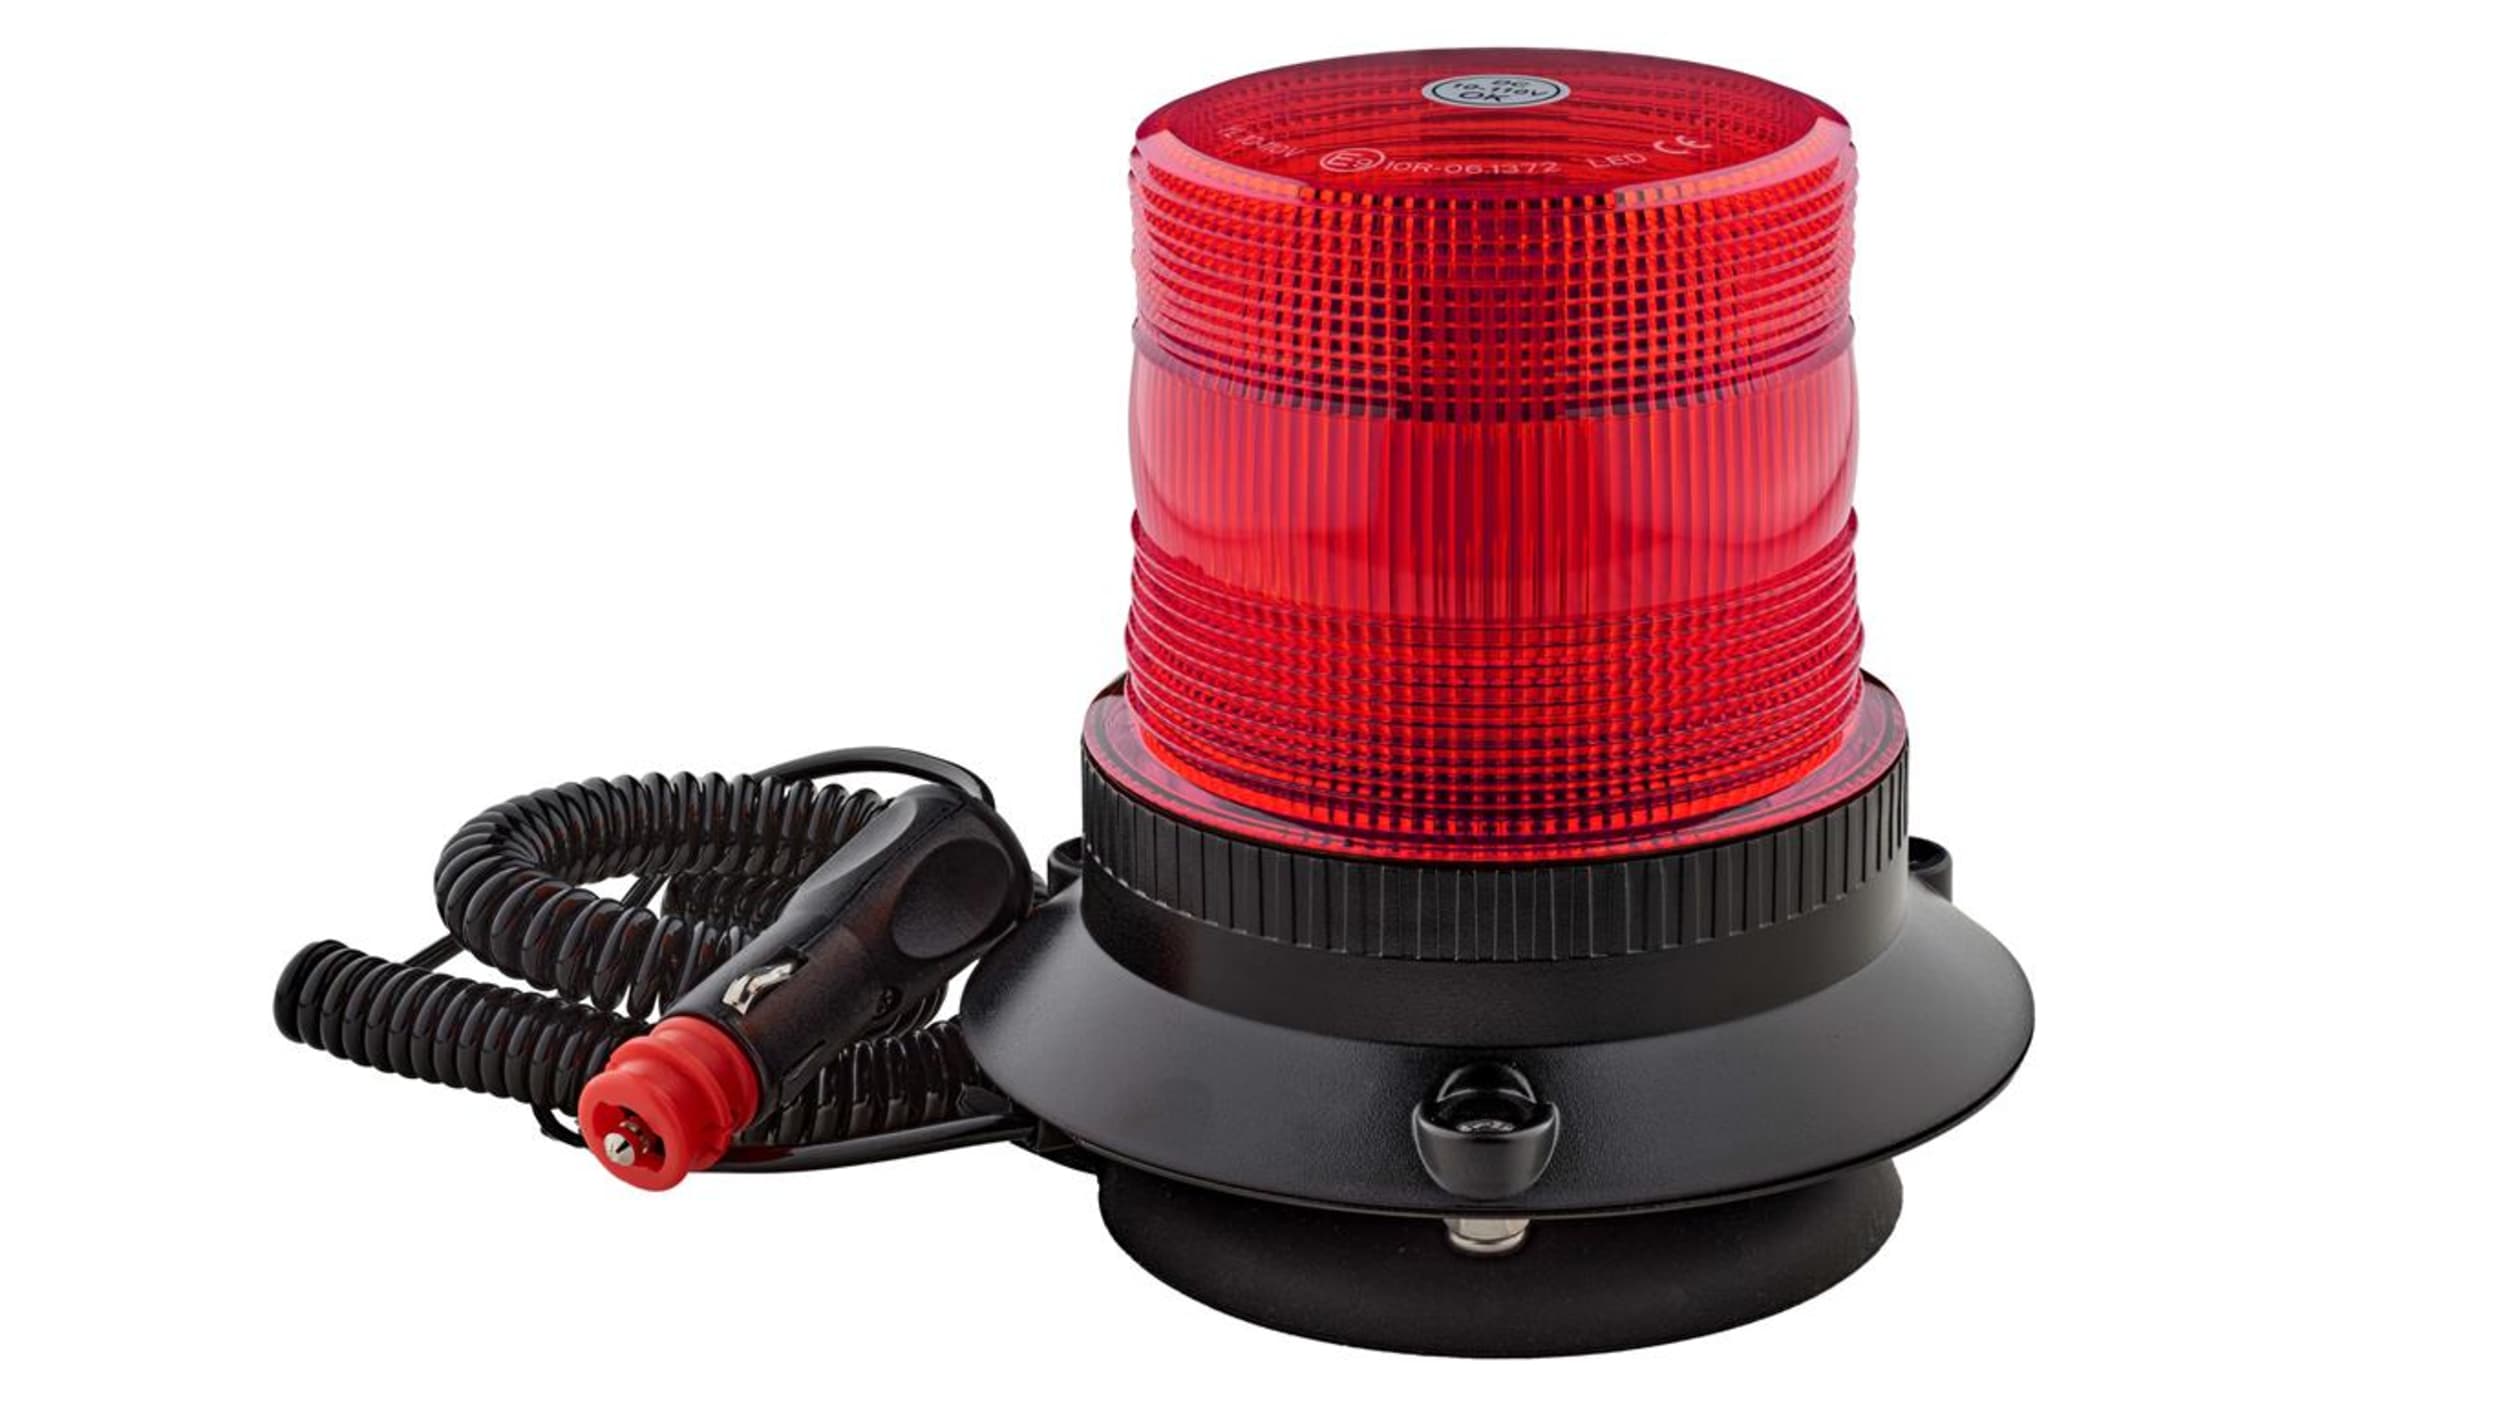 RS PRO, LED Blitz LED-Signalleuchte Rot, 10 → 110 V